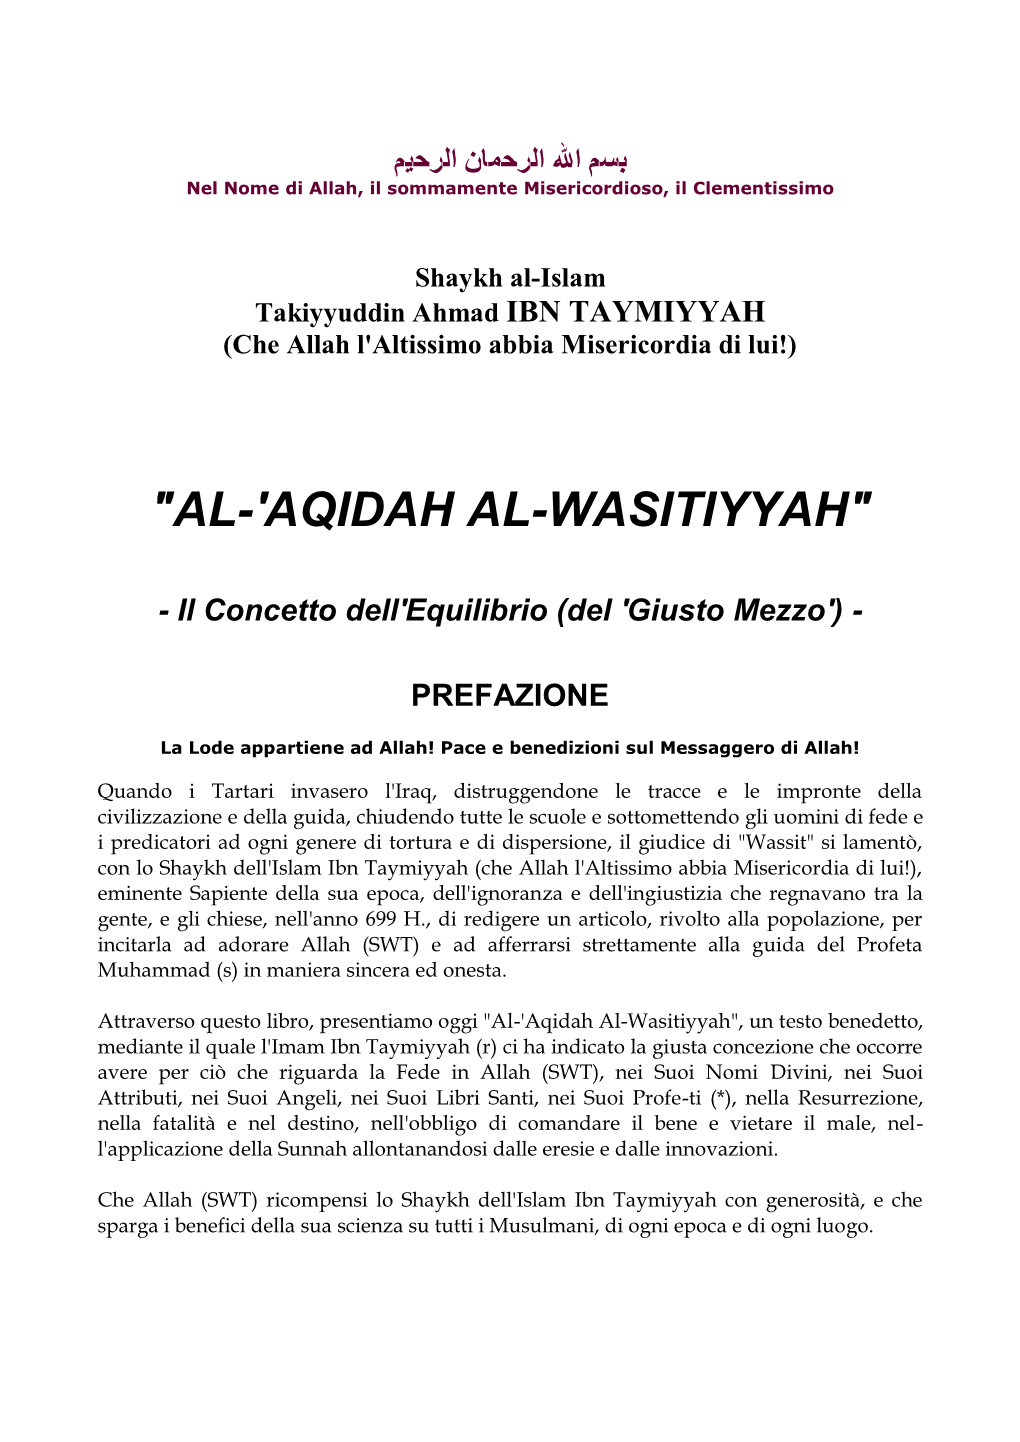 Aqidah Al-Wasitiyyah"